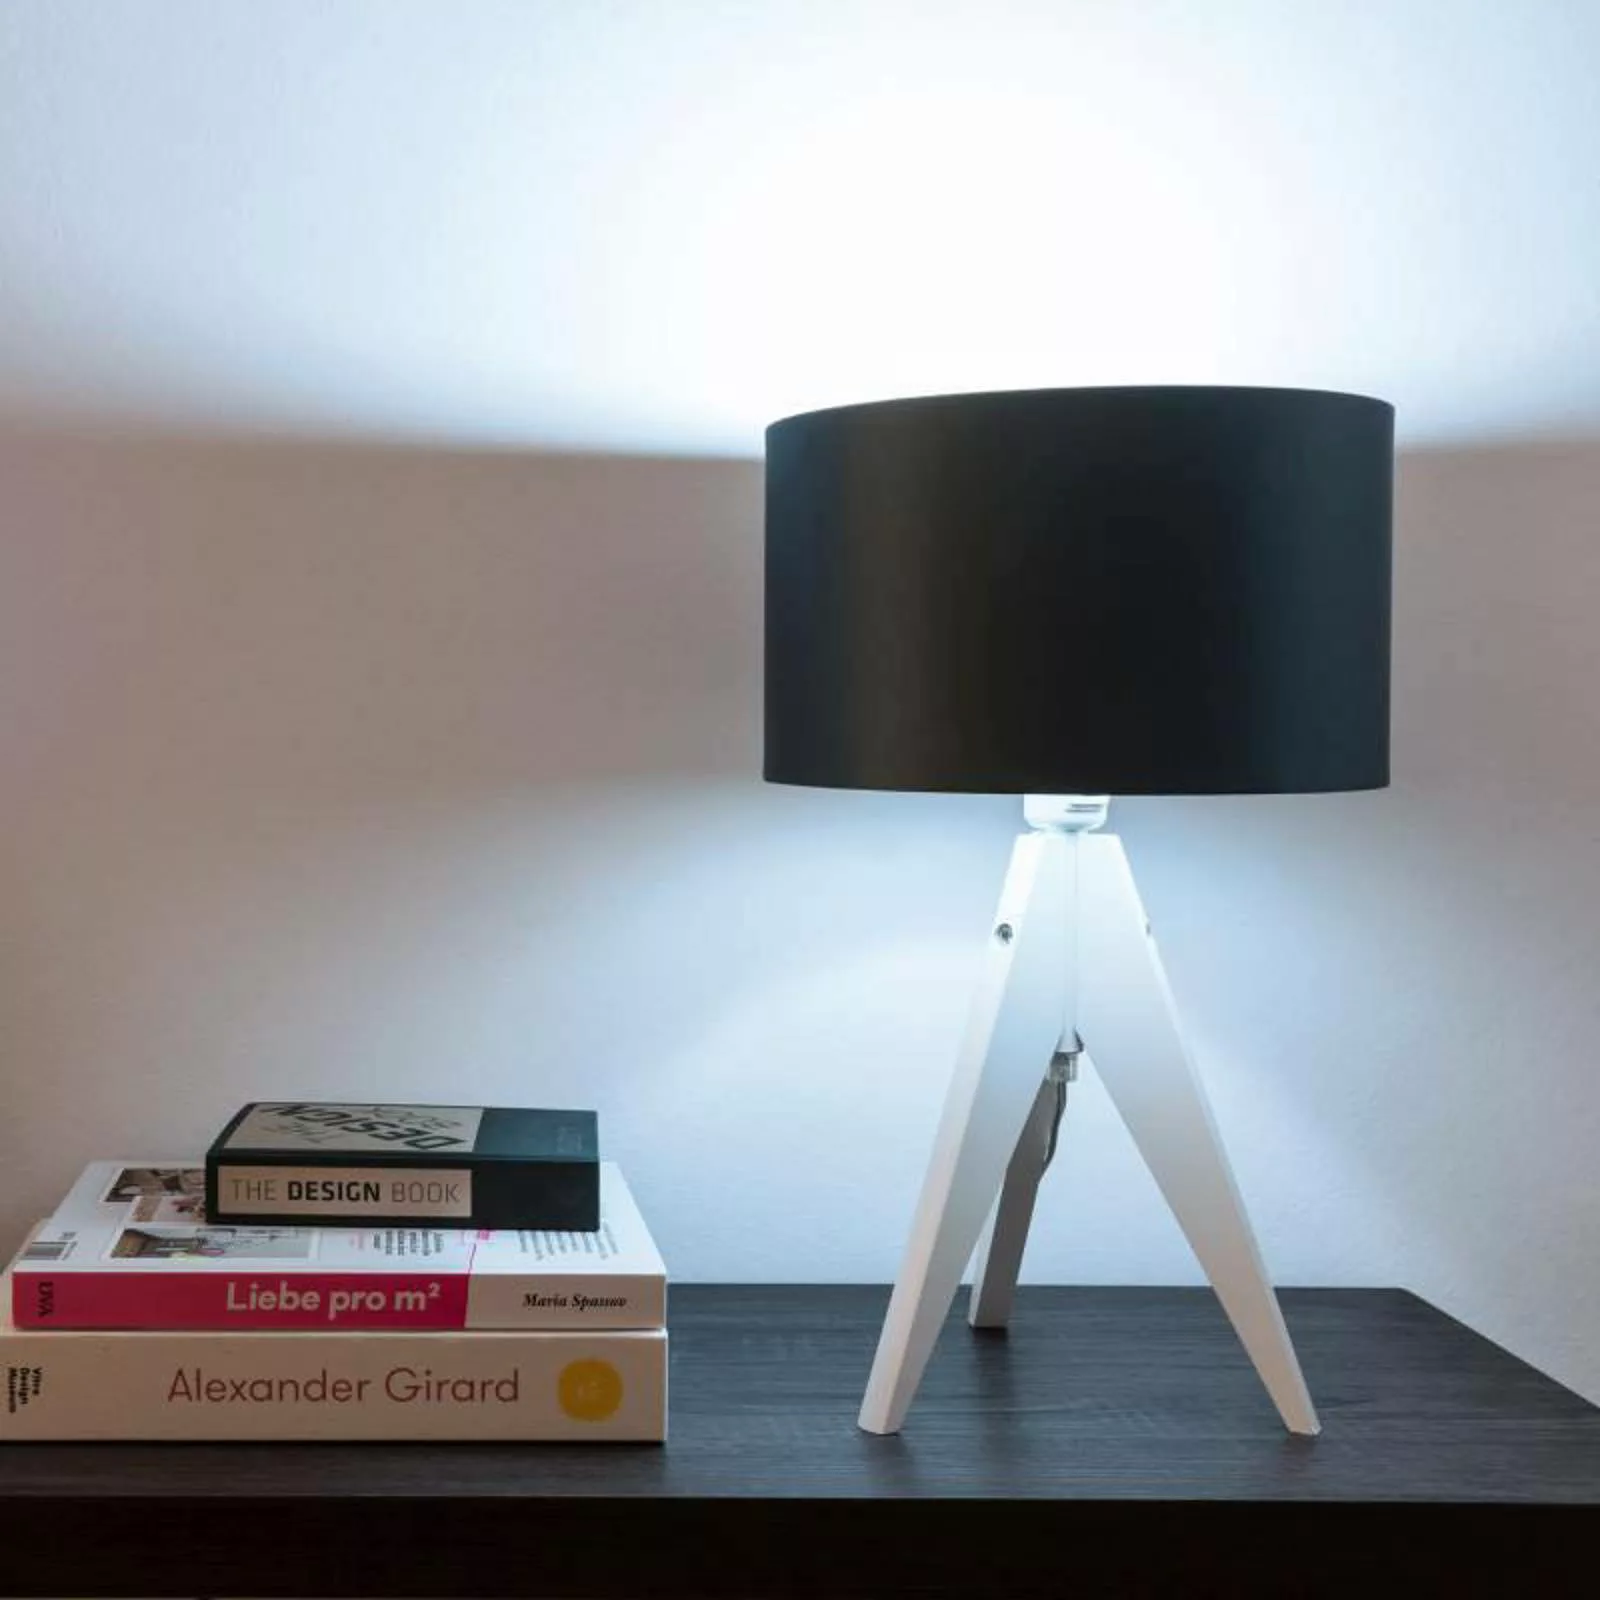 Müller Licht tint white+color LED-Lampe E14 4,9W günstig online kaufen